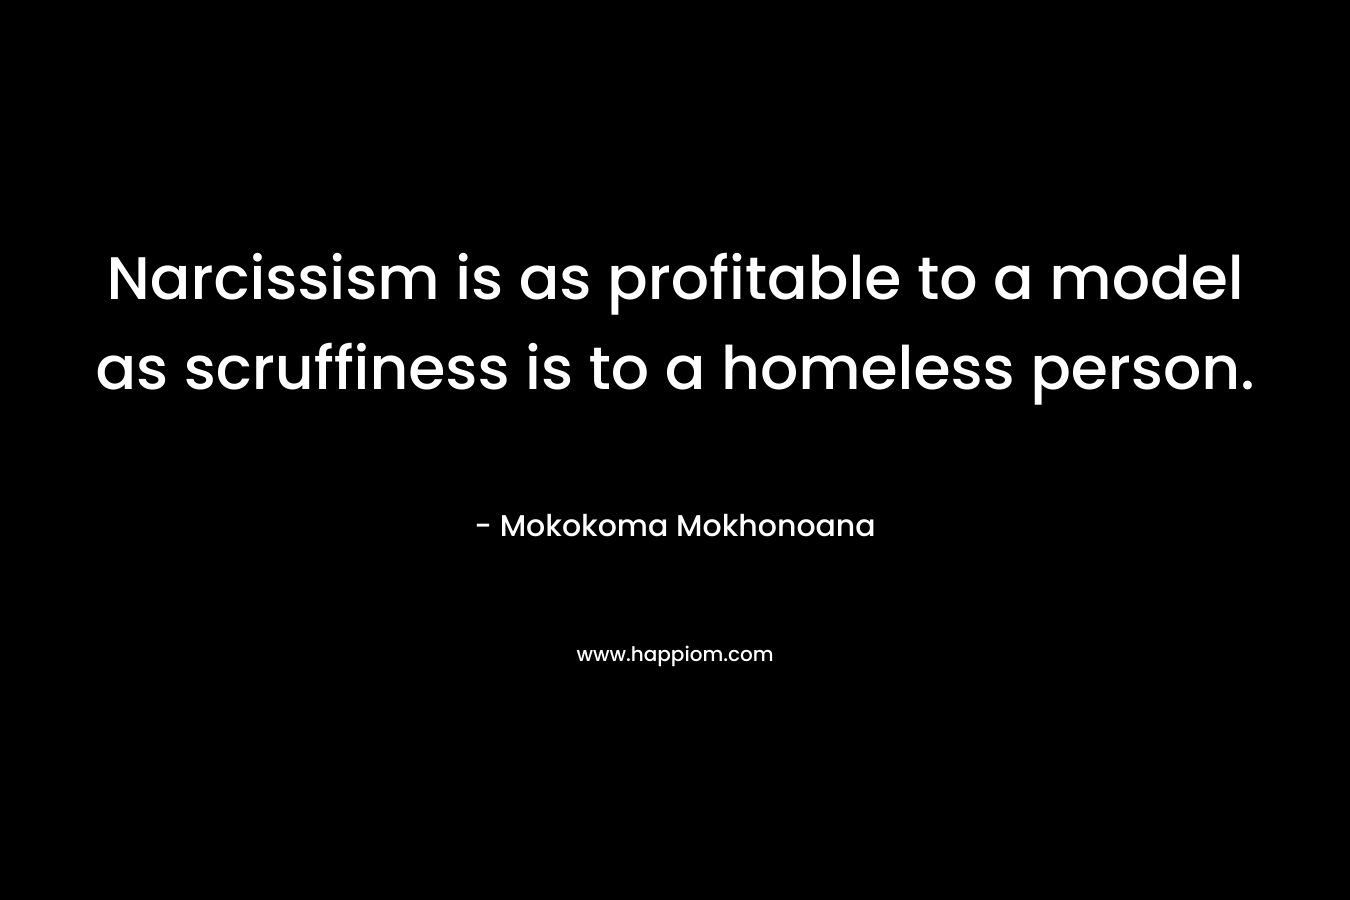 Narcissism is as profitable to a model as scruffiness is to a homeless person. – Mokokoma Mokhonoana